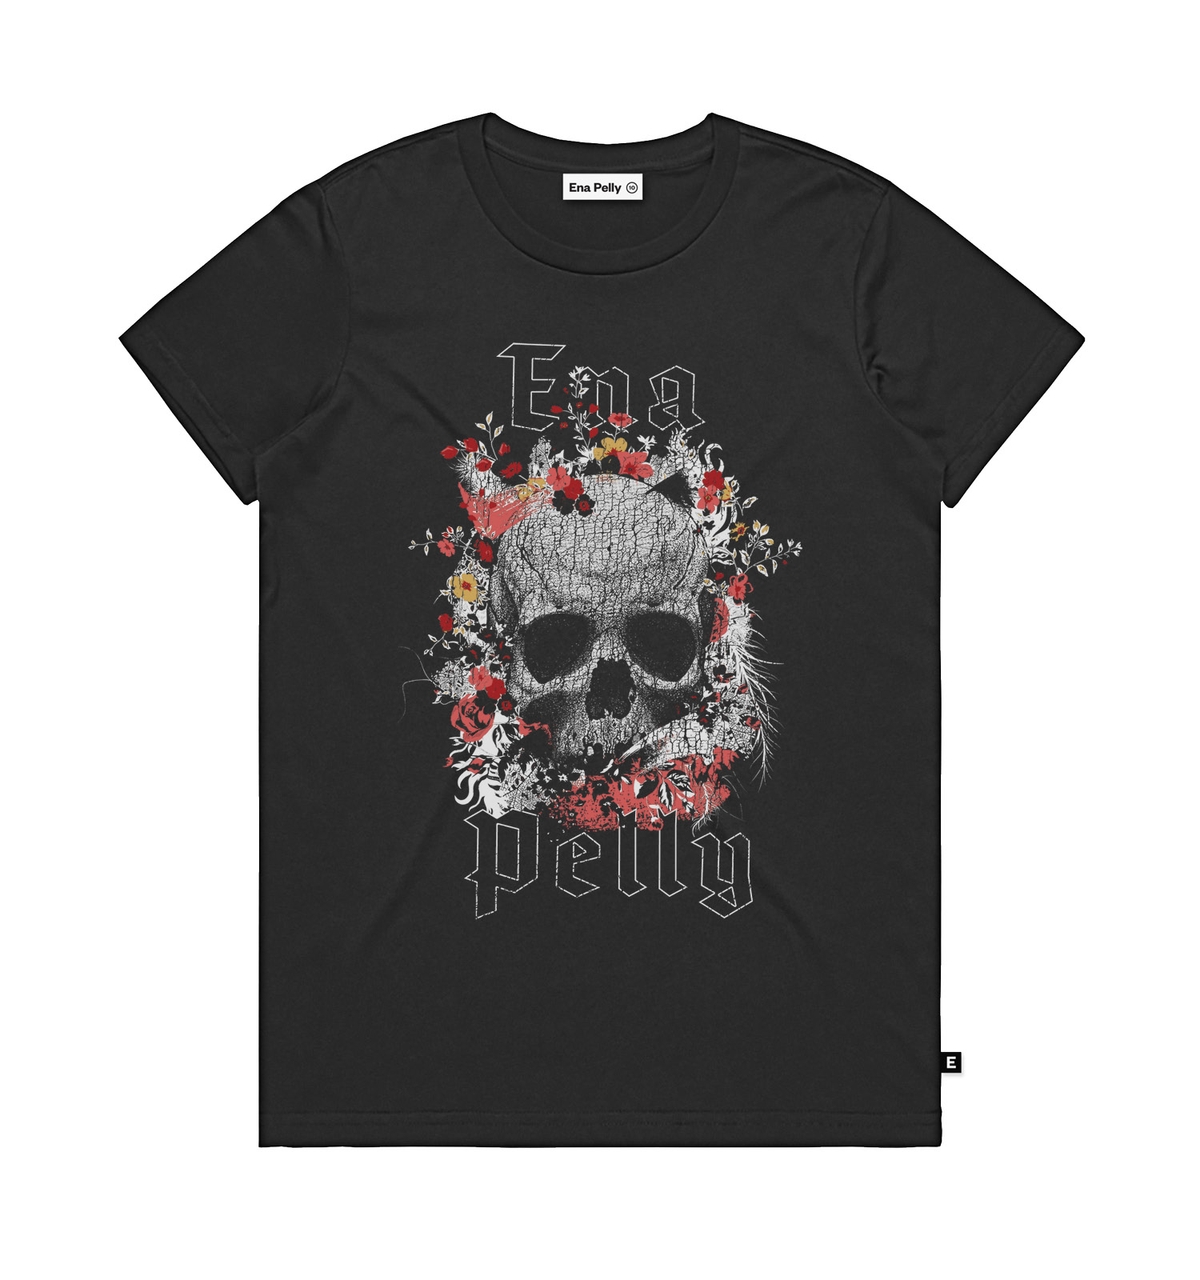 Ena Pelly - Rocker Skull T-Shirt Graphic | Atollon - a design company